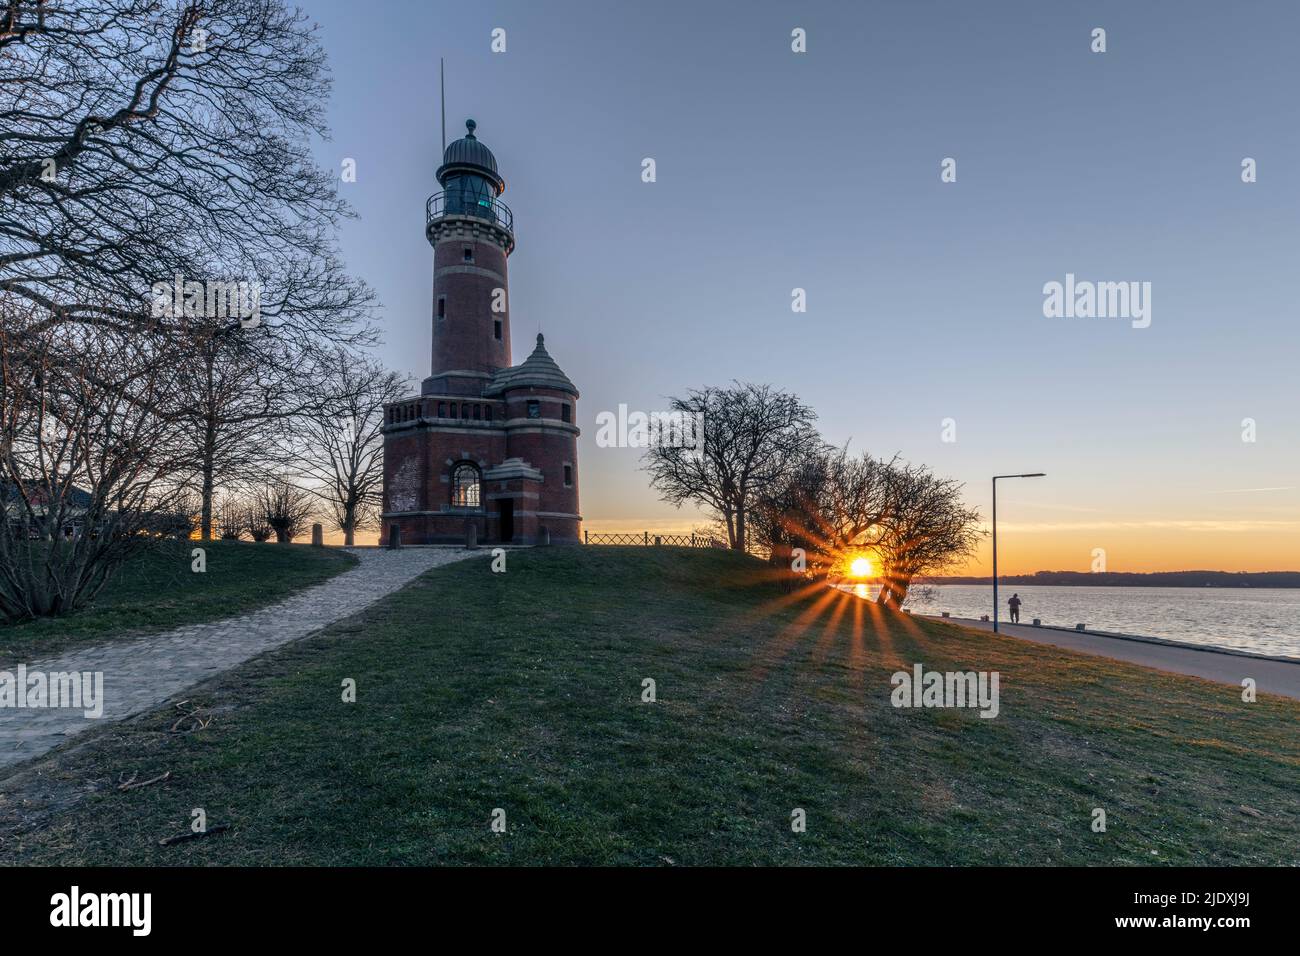 Germany, Schleswig-Holstein, Kiel, Lighthouse overlooking Kiel Canal at sunrise Stock Photo